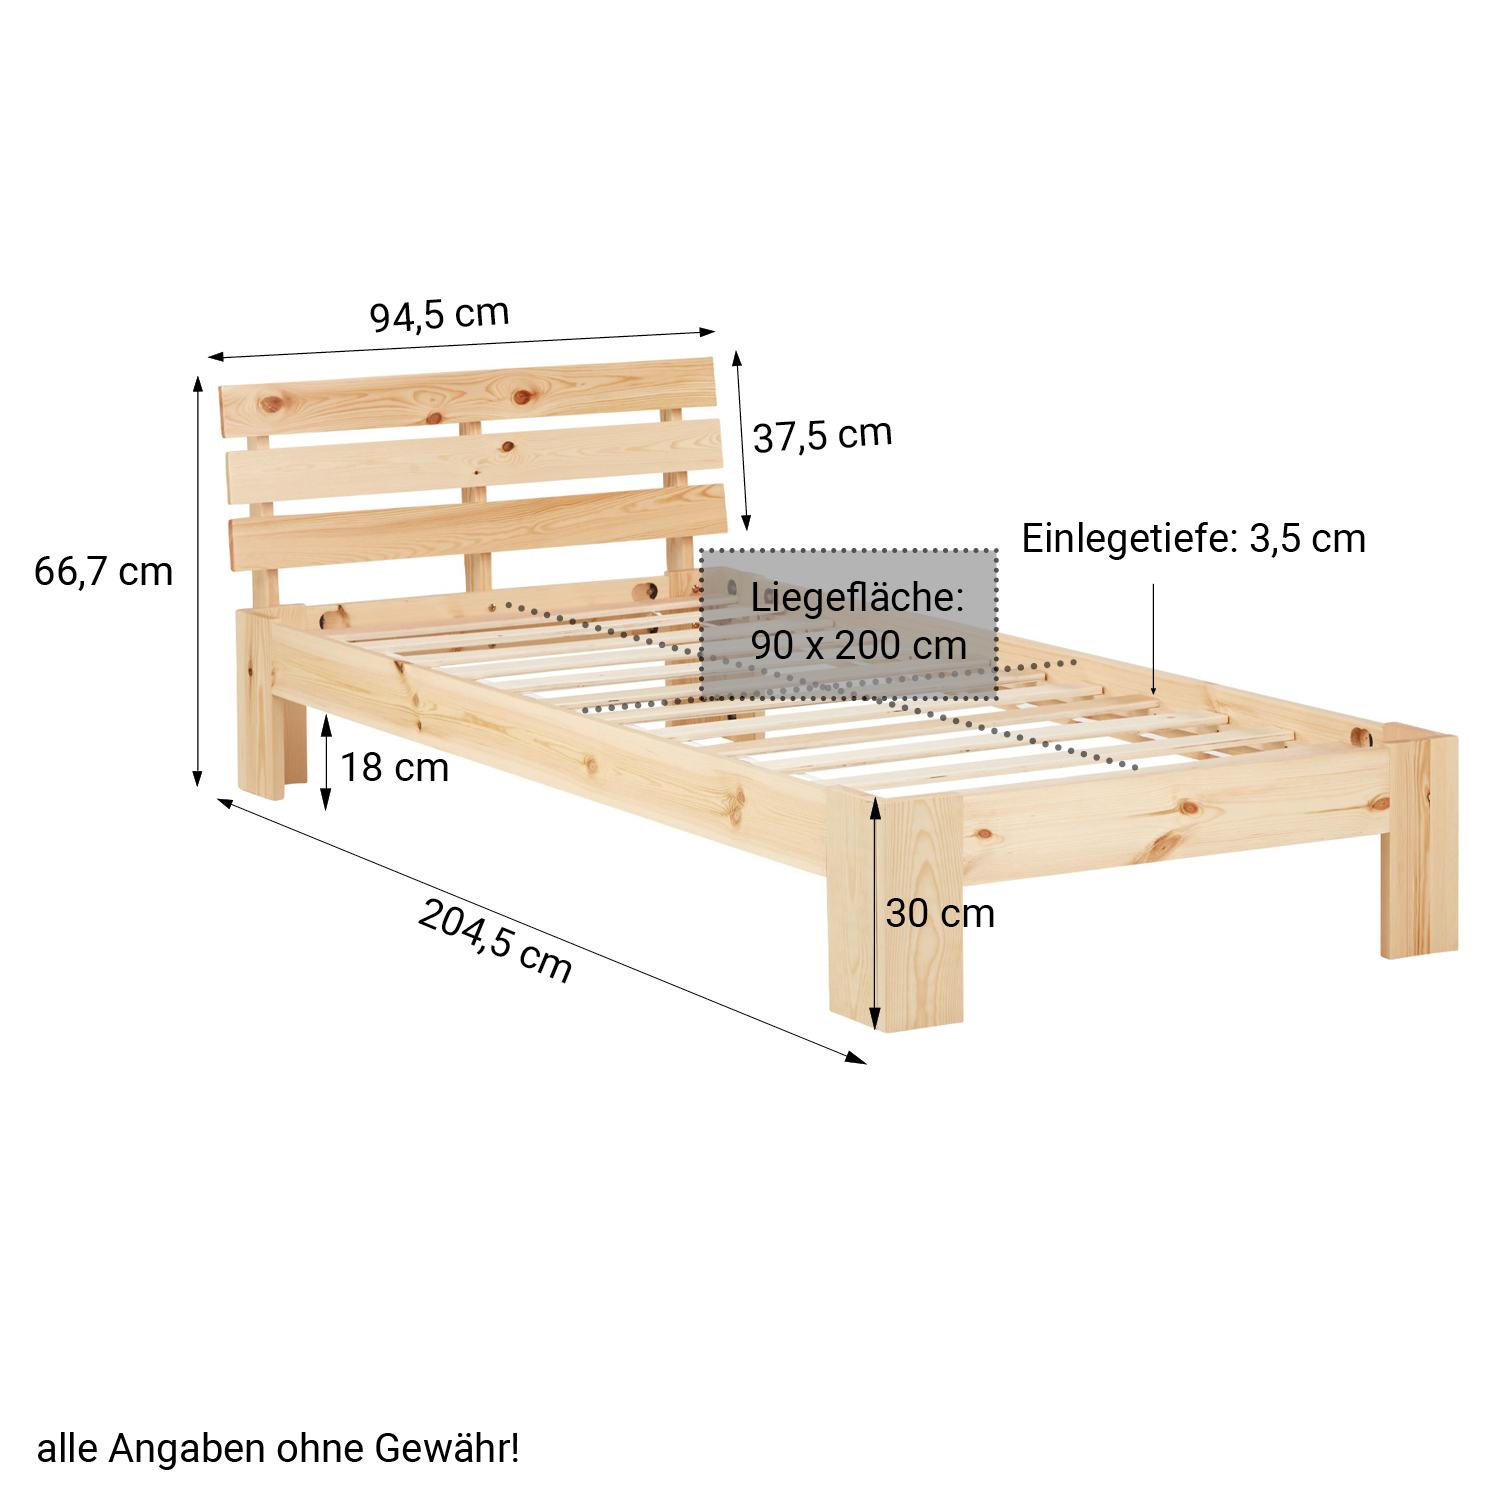 Doppelbett Holzbett Futonbett 90 120 140 160 180 cm weiß natur oder grau Bett Bettgestell Massivholz Einzelbett